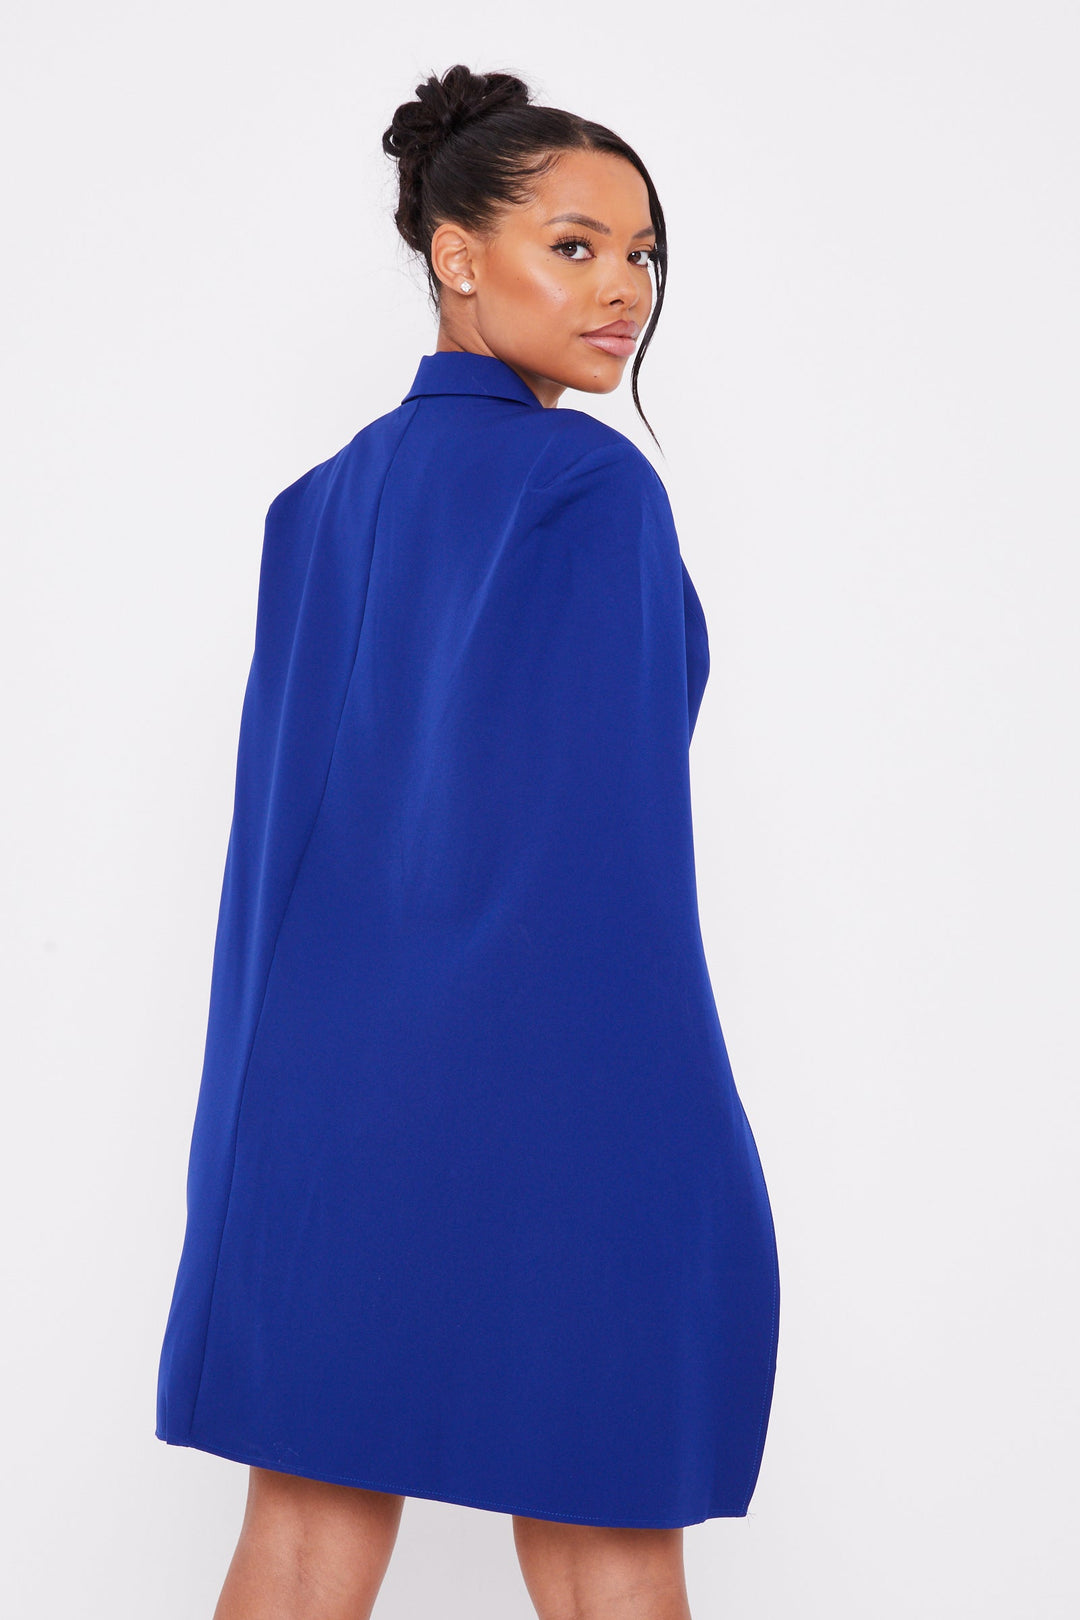 Blue Blazer Cape Dress